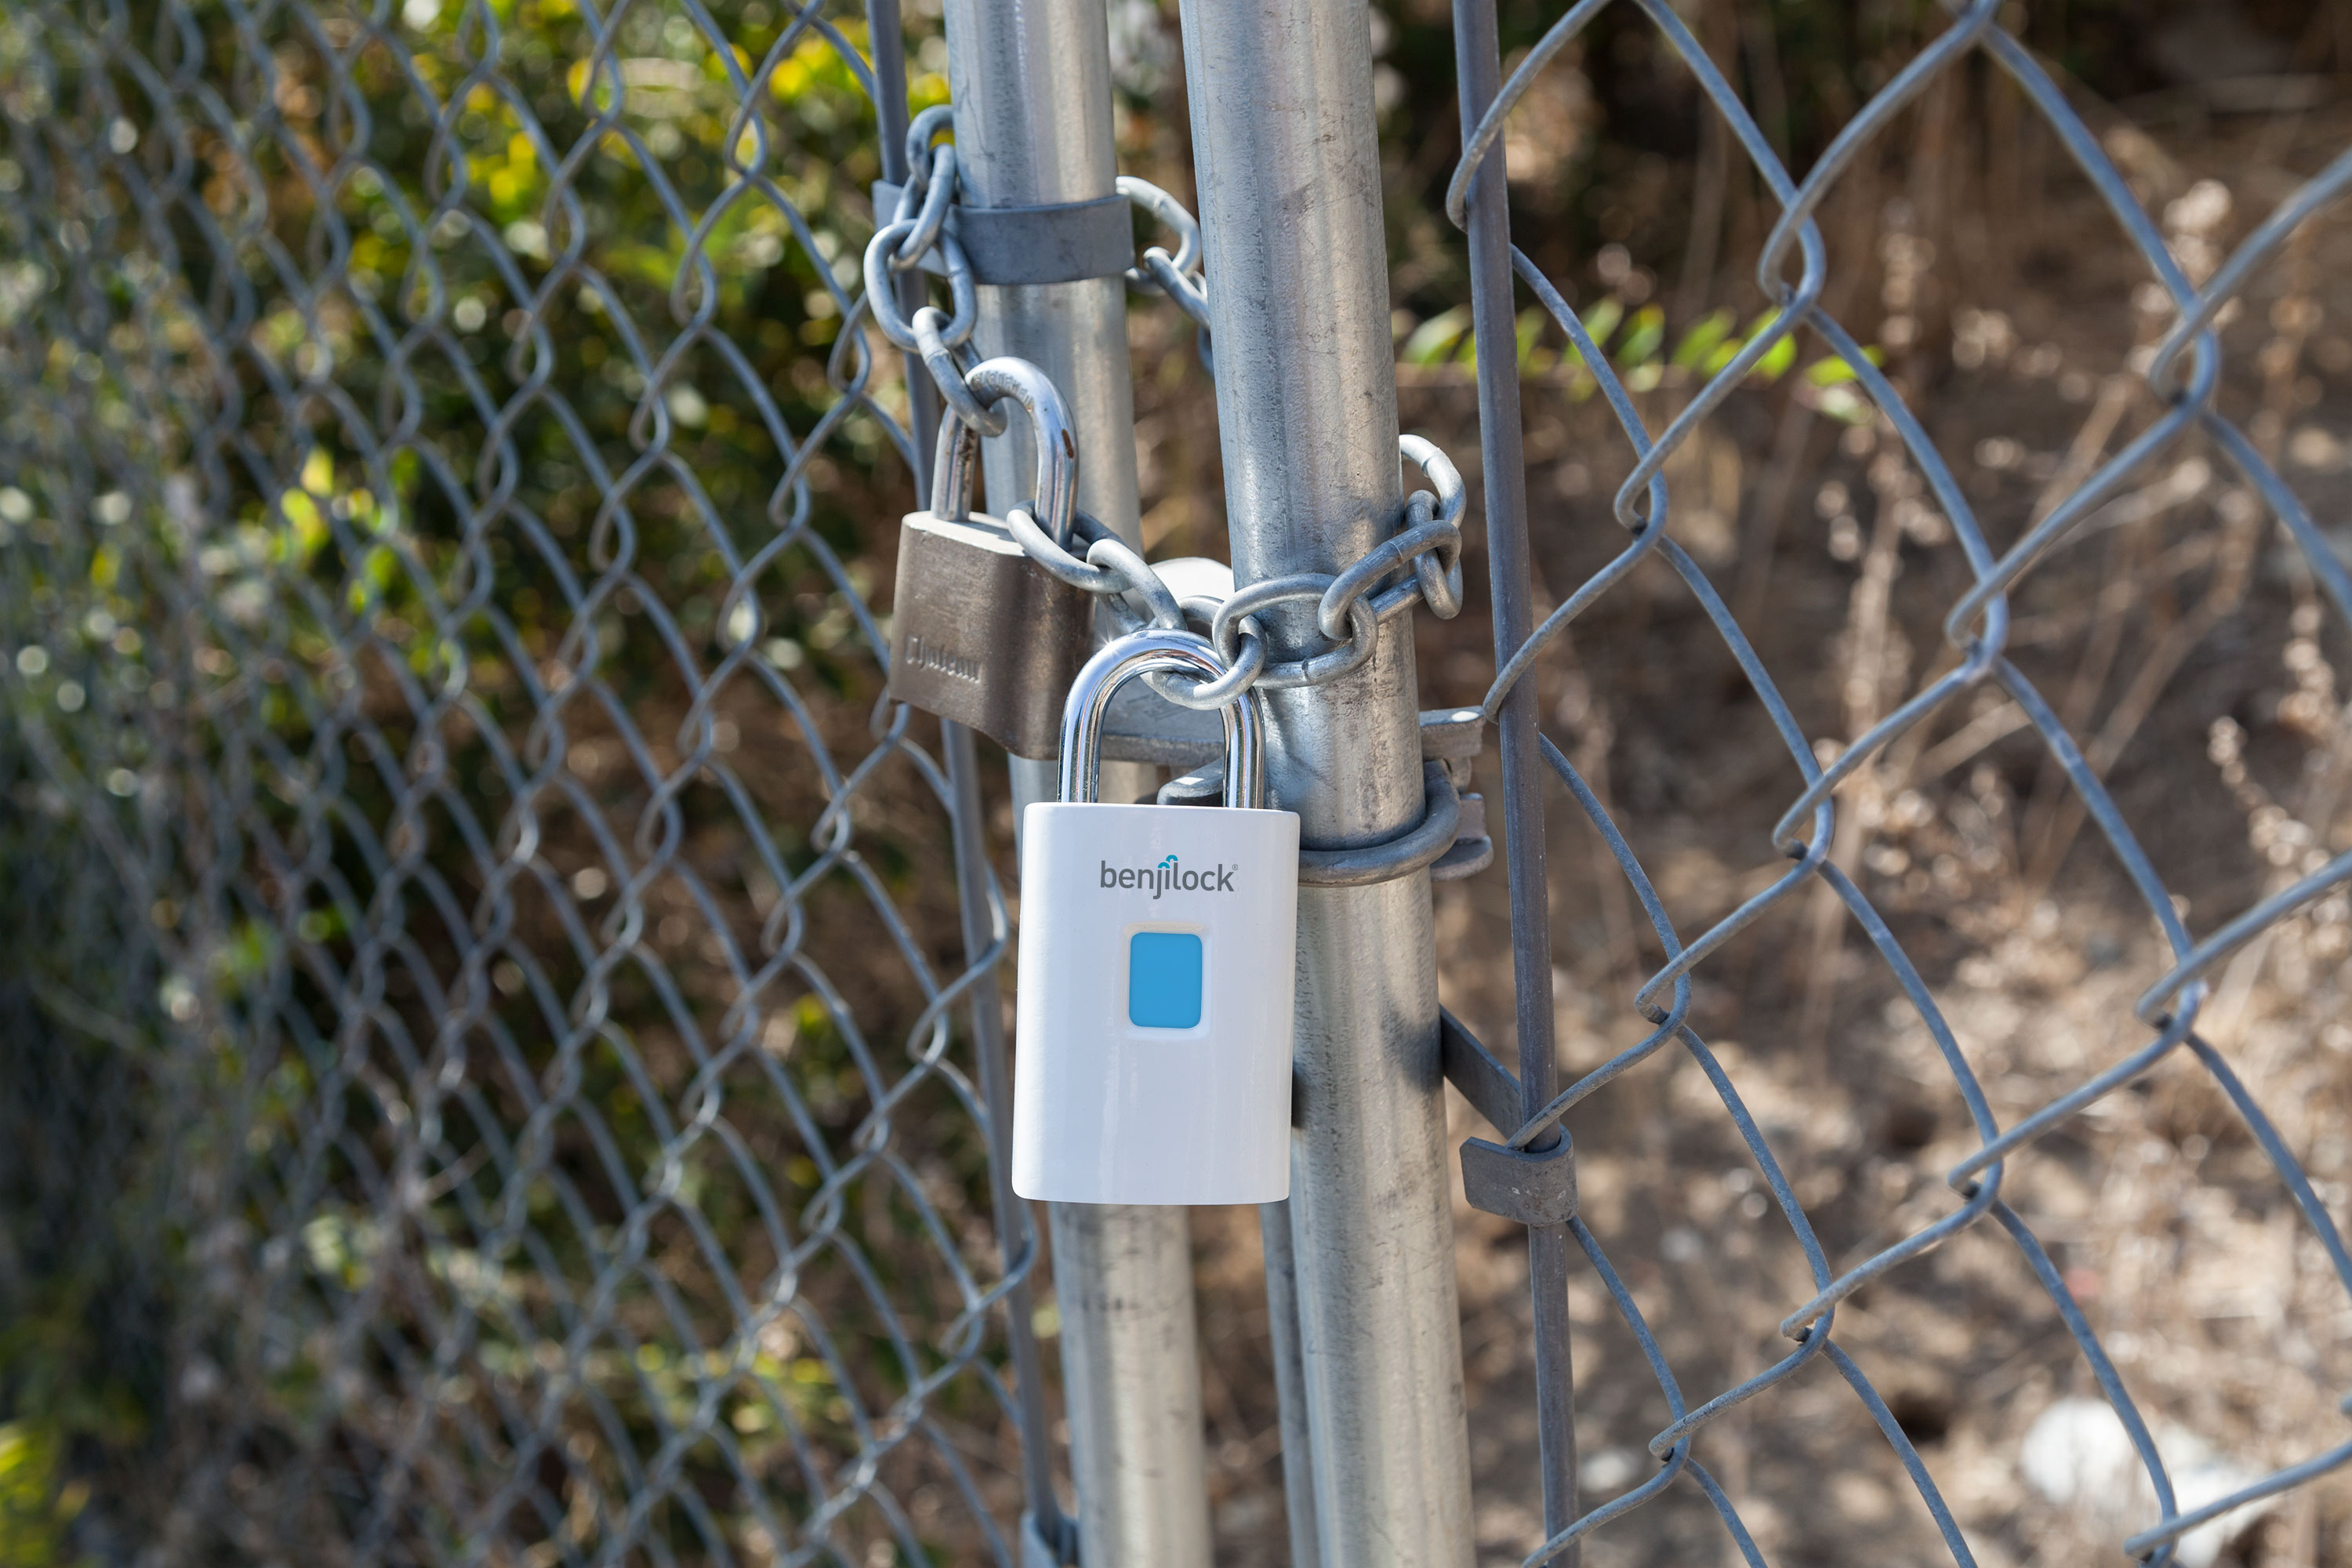 benjilock unveils smart padlock at ces 2017 lifestyle chainlink fence